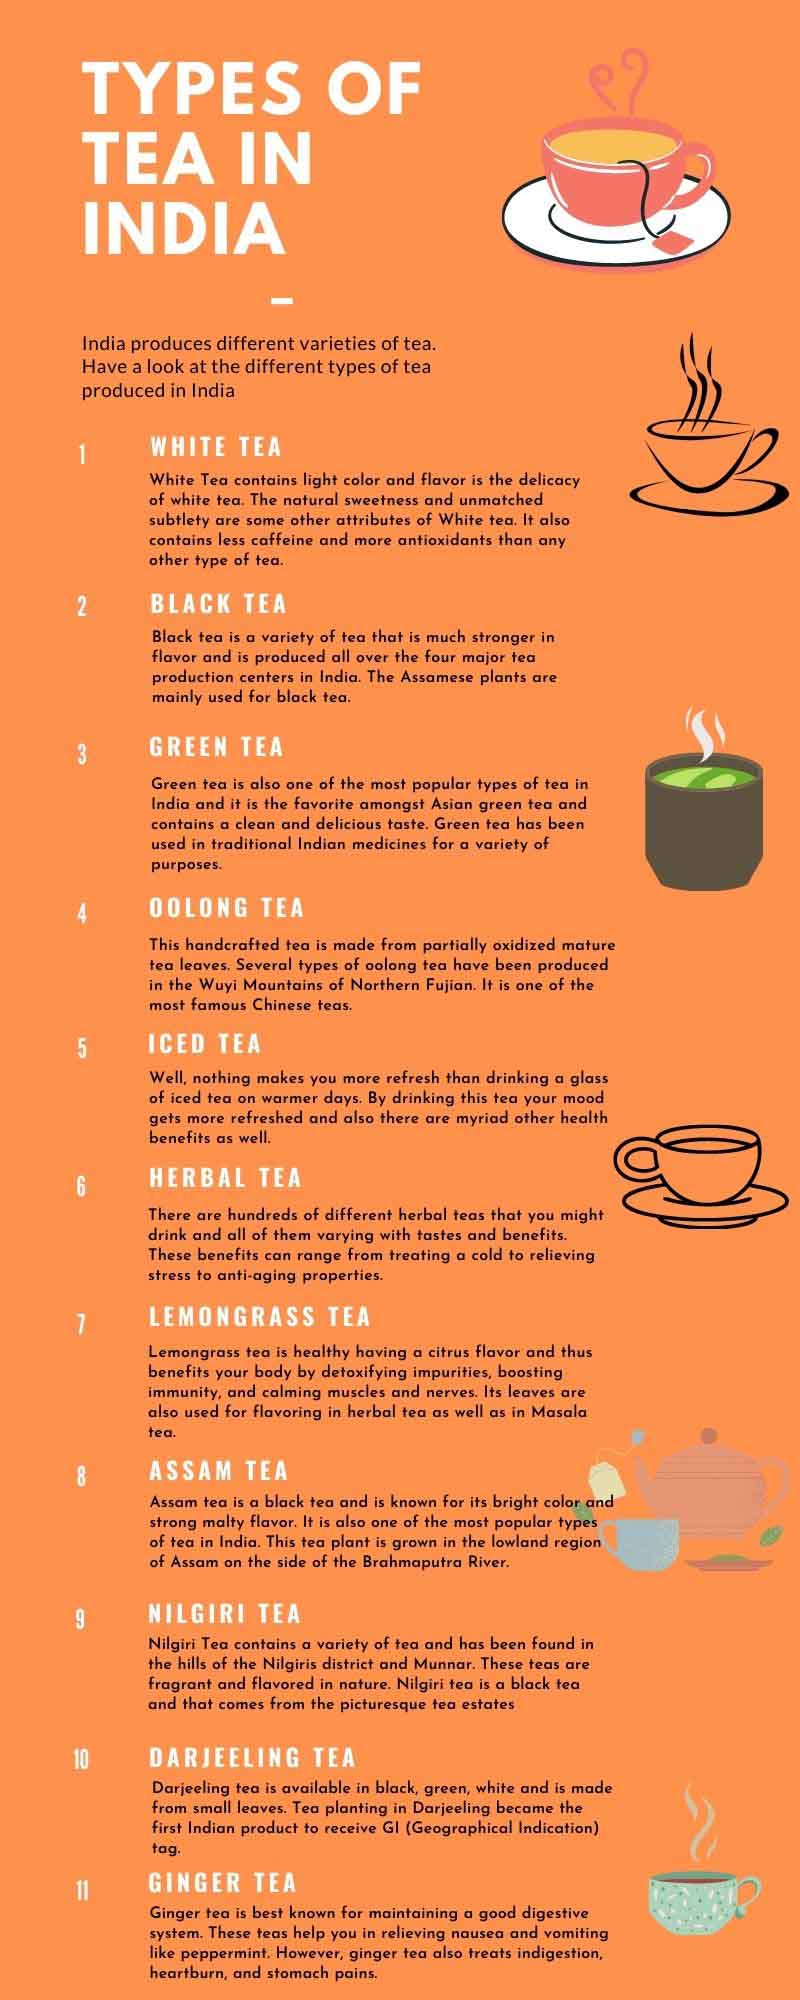 Types of Tea in India